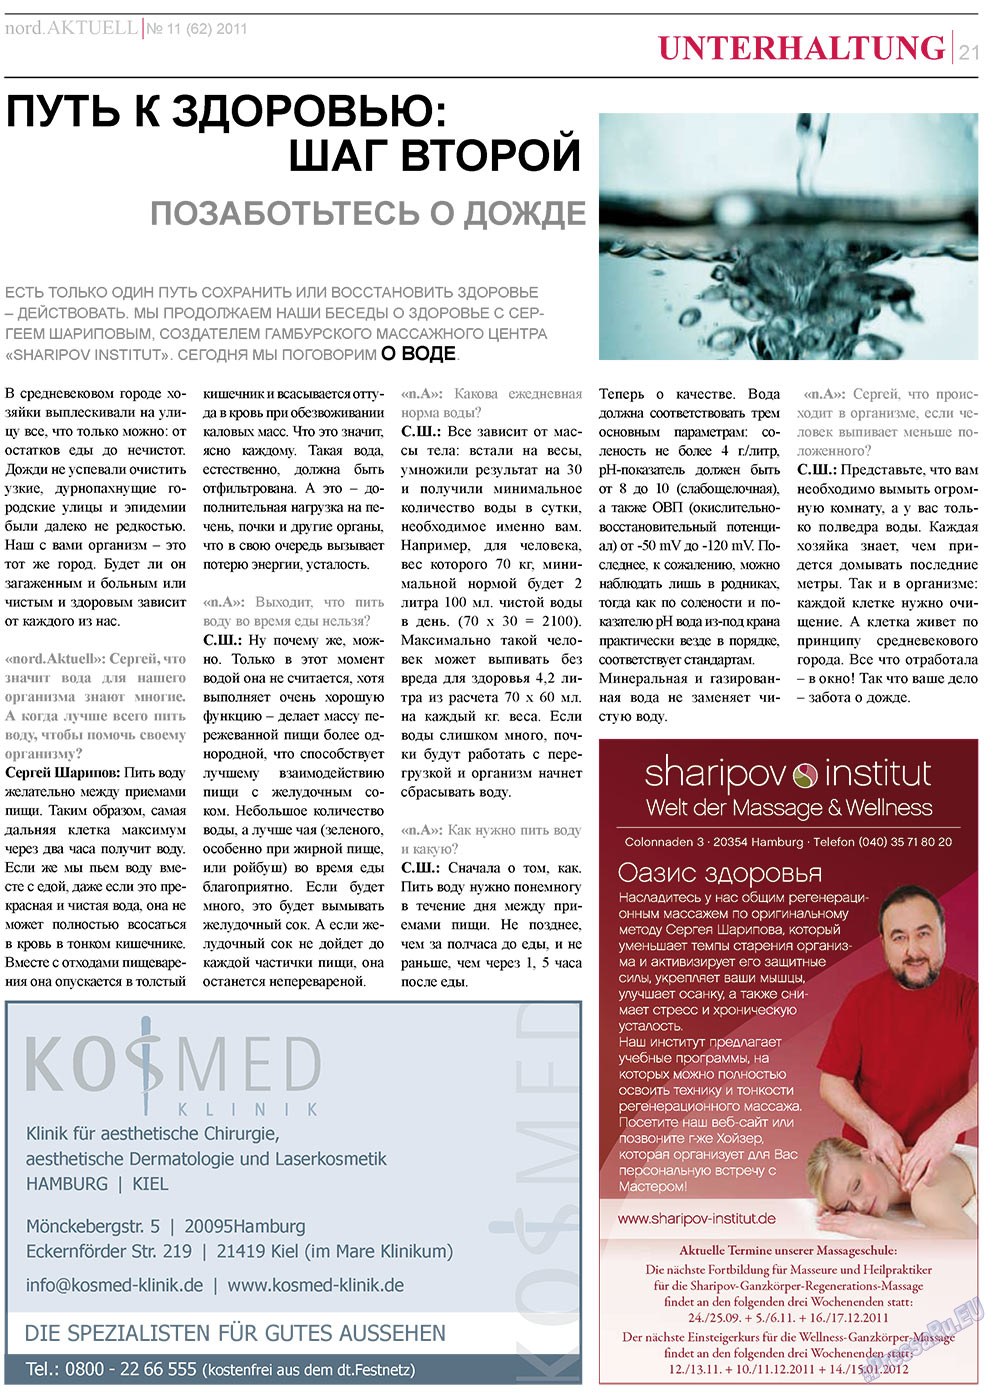 nord.Aktuell, газета. 2011 №11 стр.21